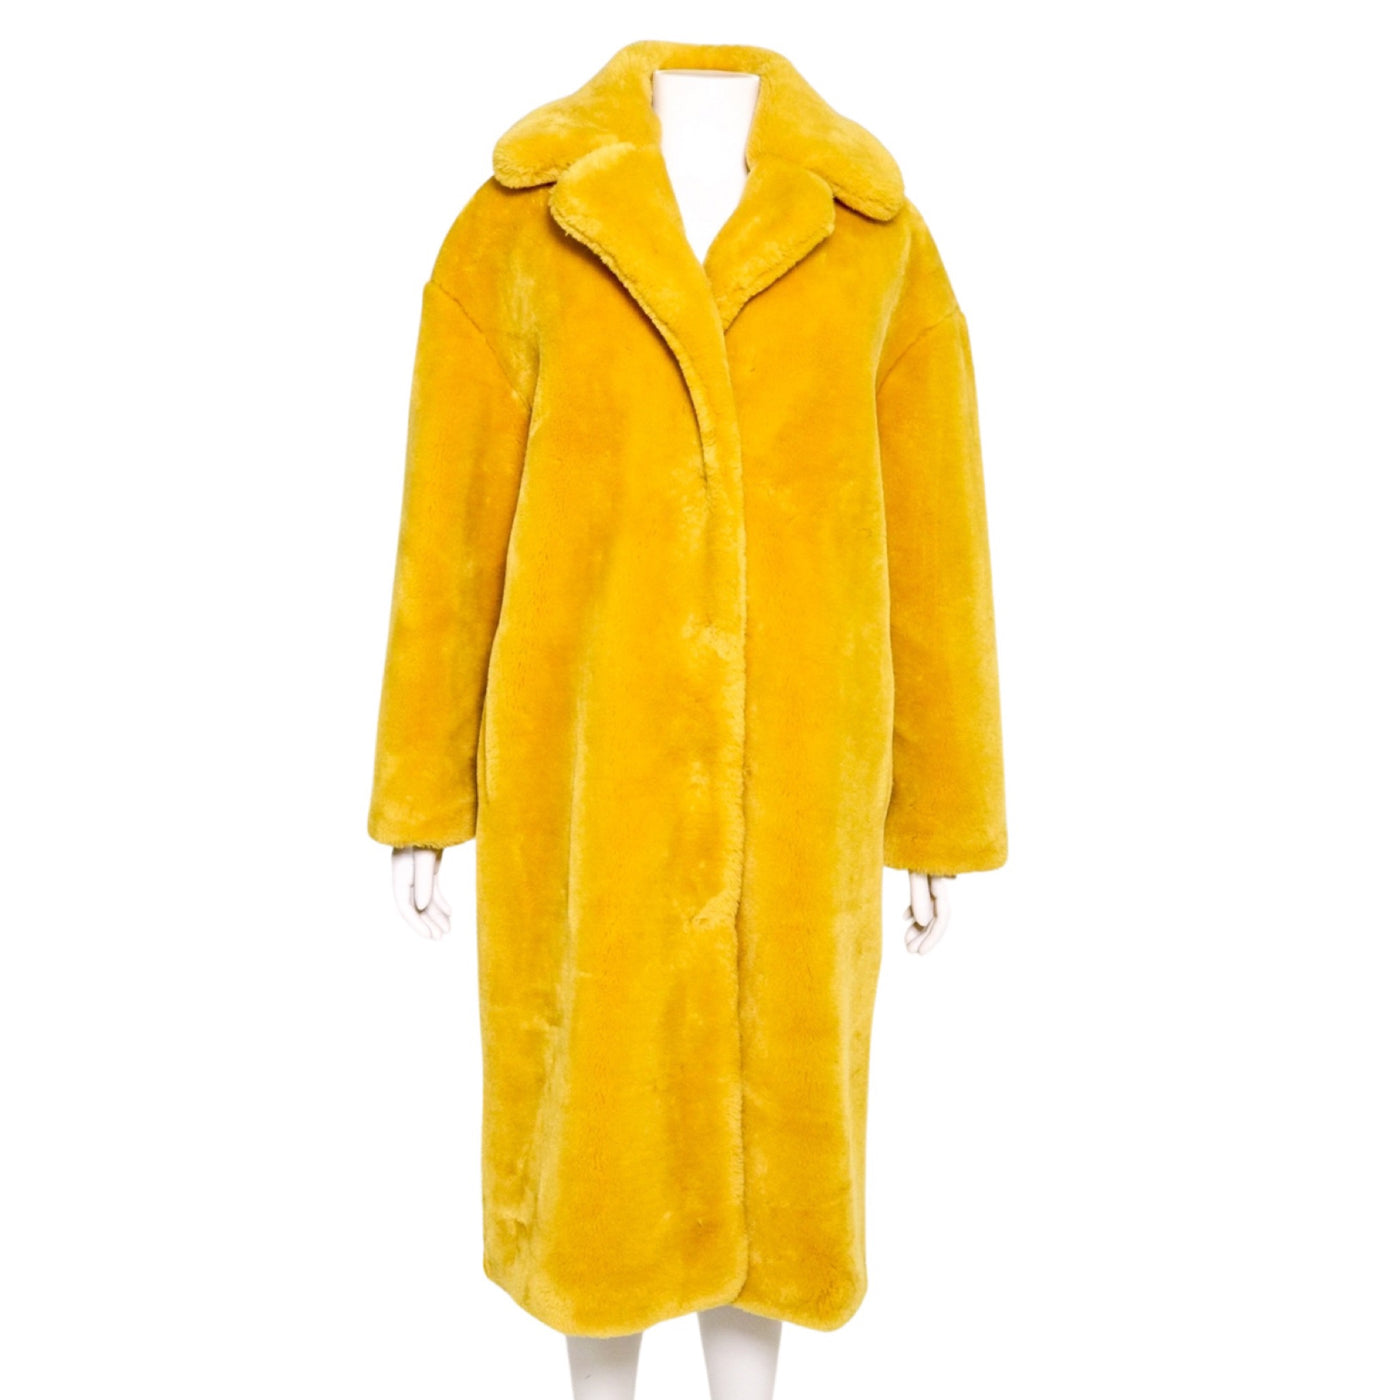 Marley Yellow Faux Fur Coat